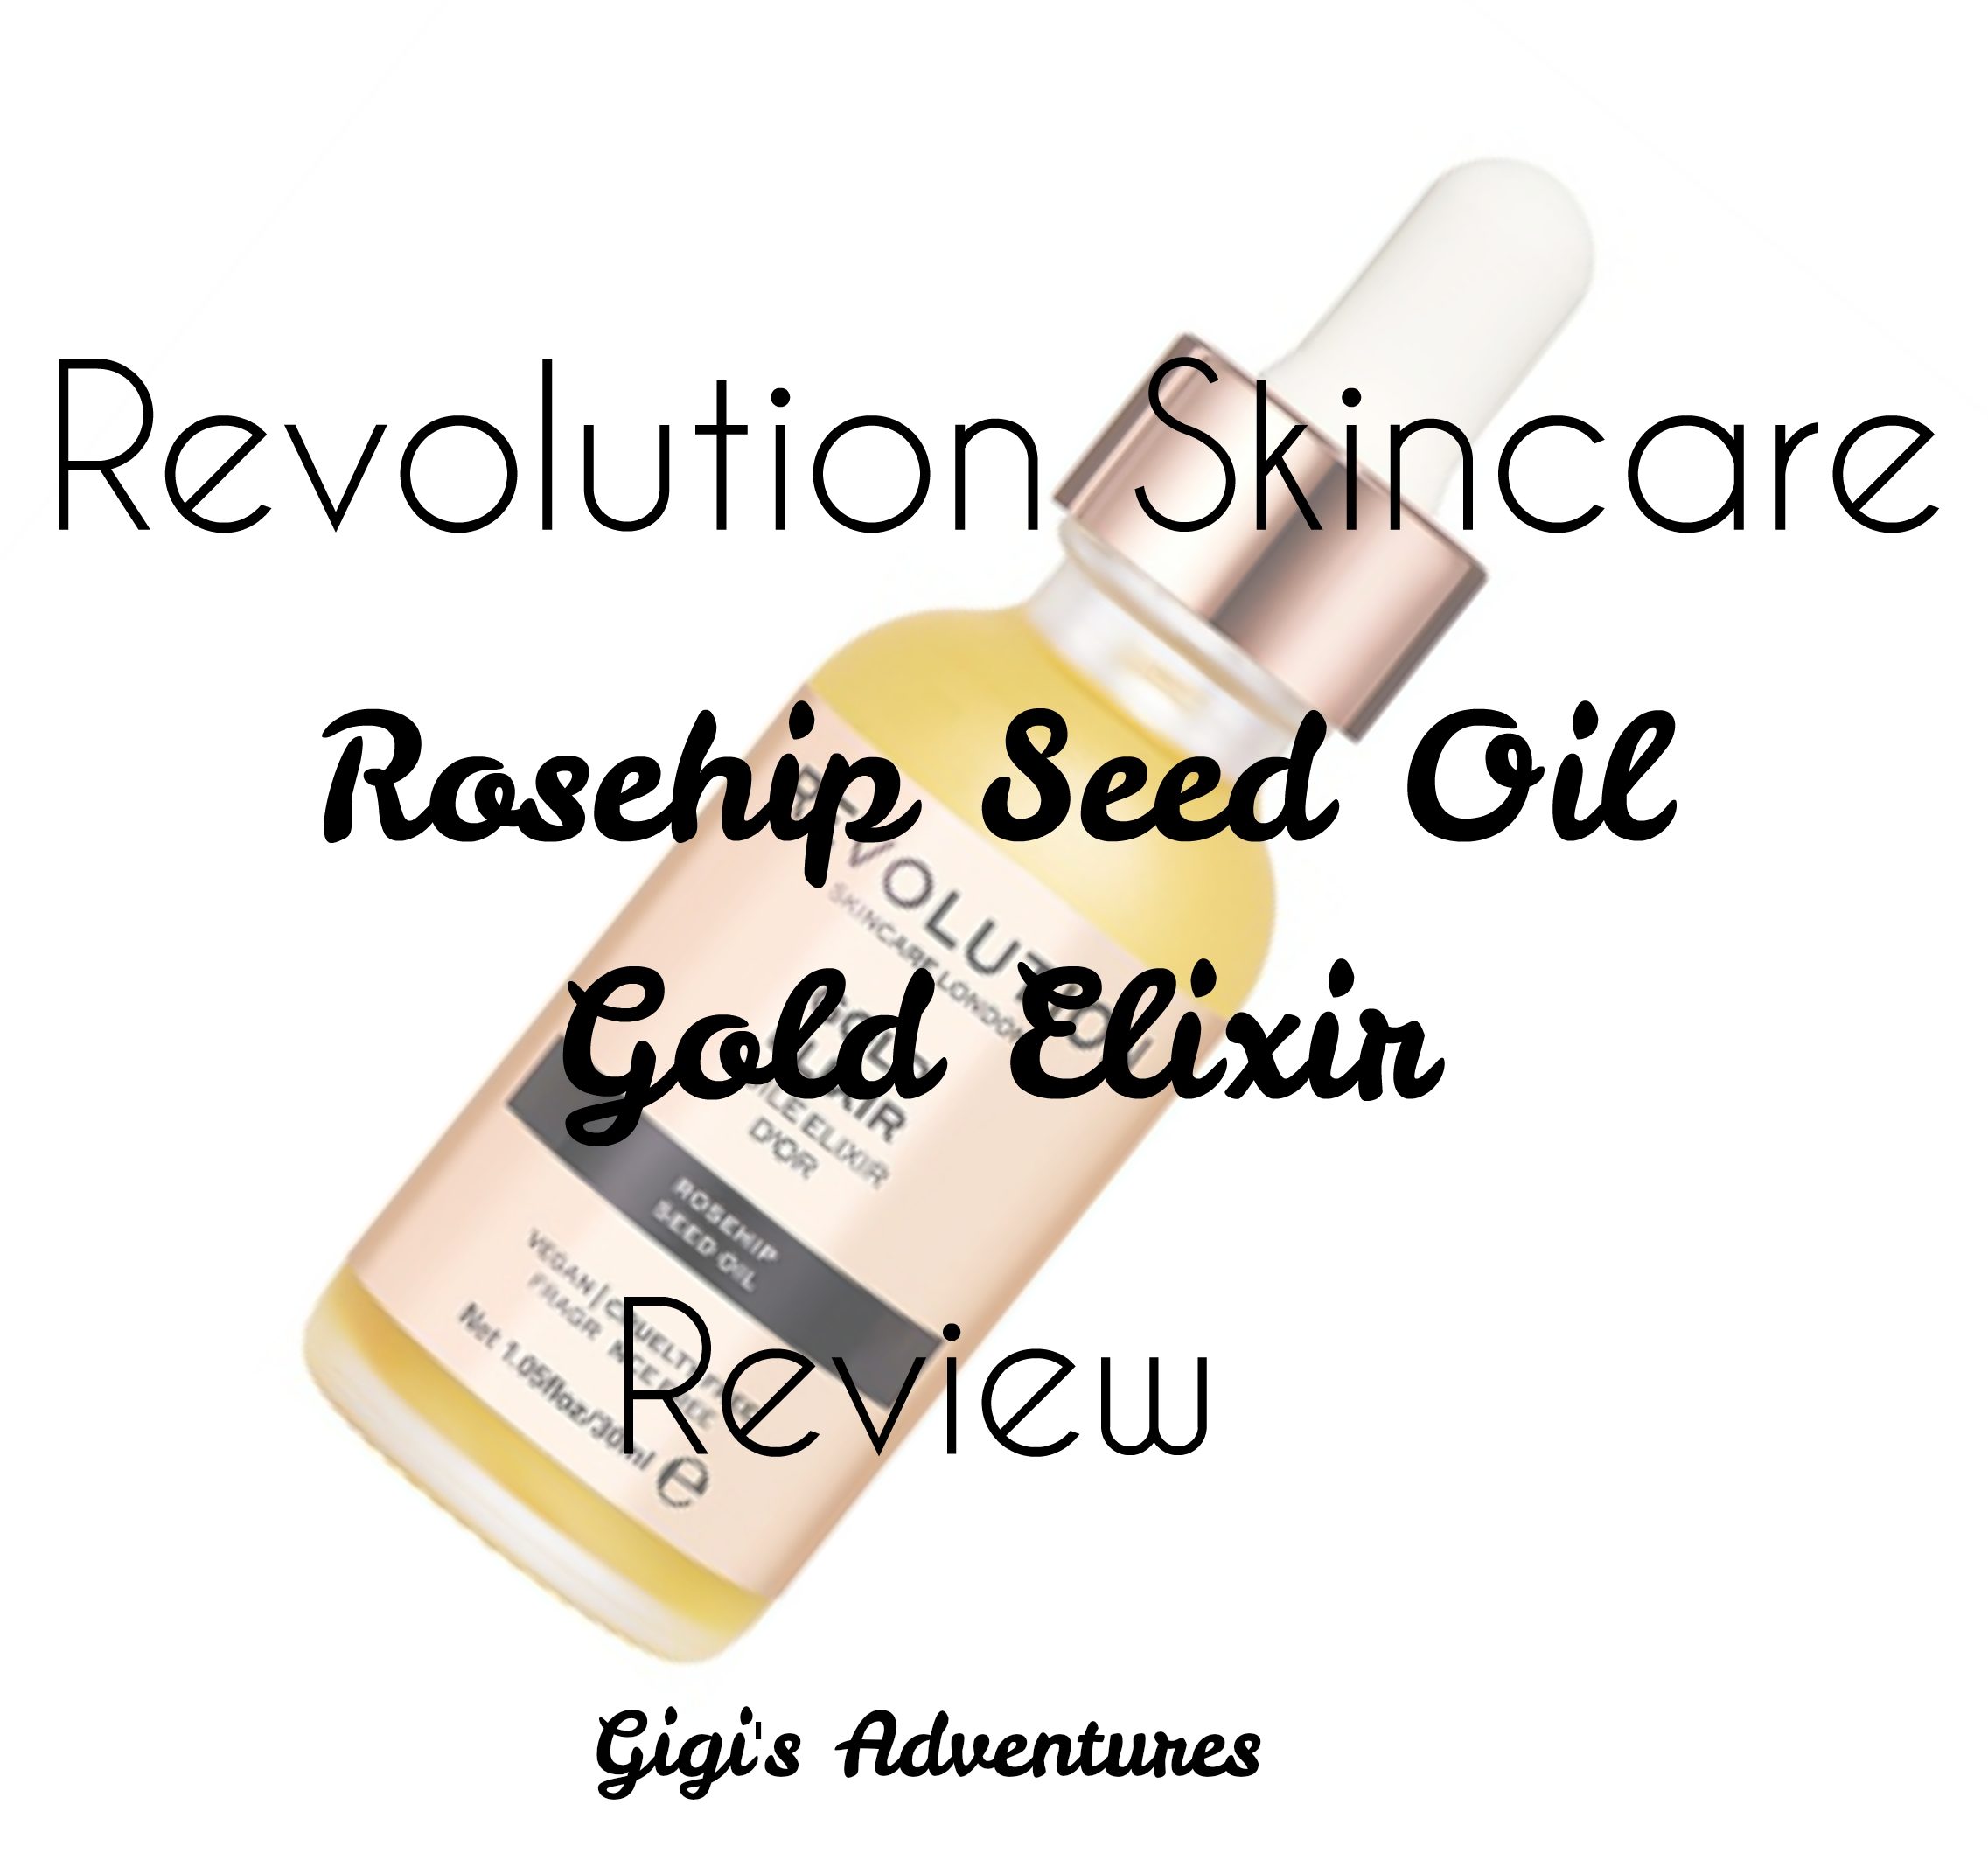 Revolution Skincare Rosehip Seed Oil Gold Elixir Review